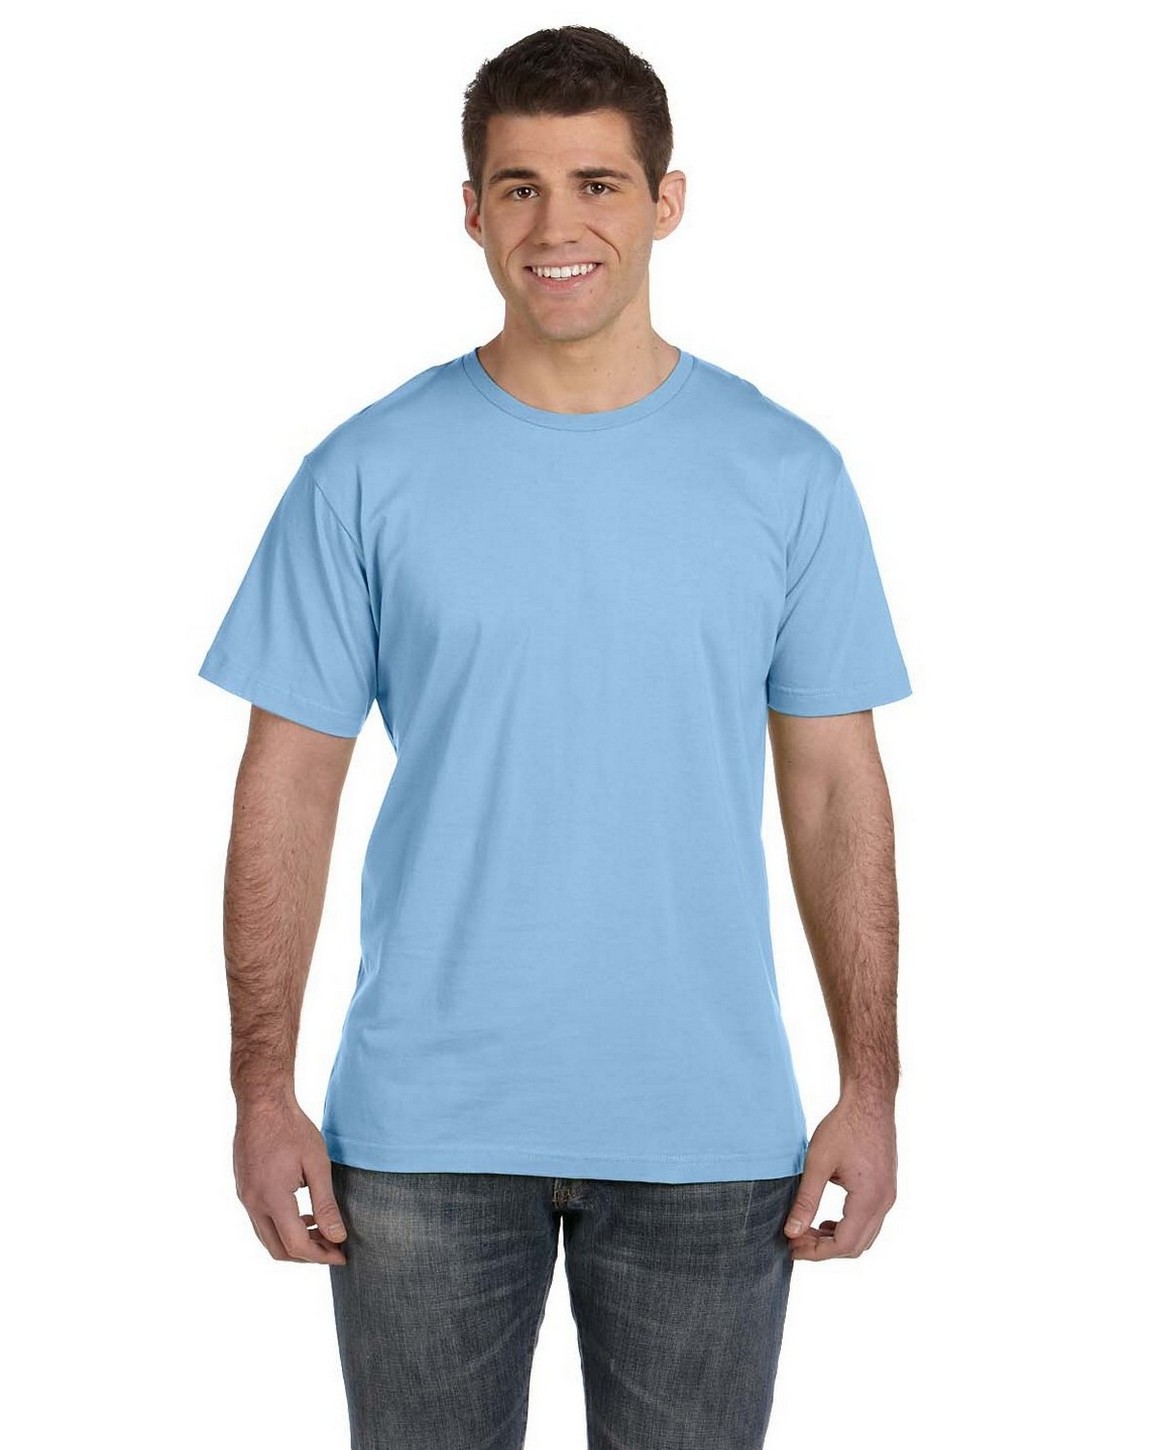 LAT 6901 Fine Jersey T-Shirt - ApparelnBags.com